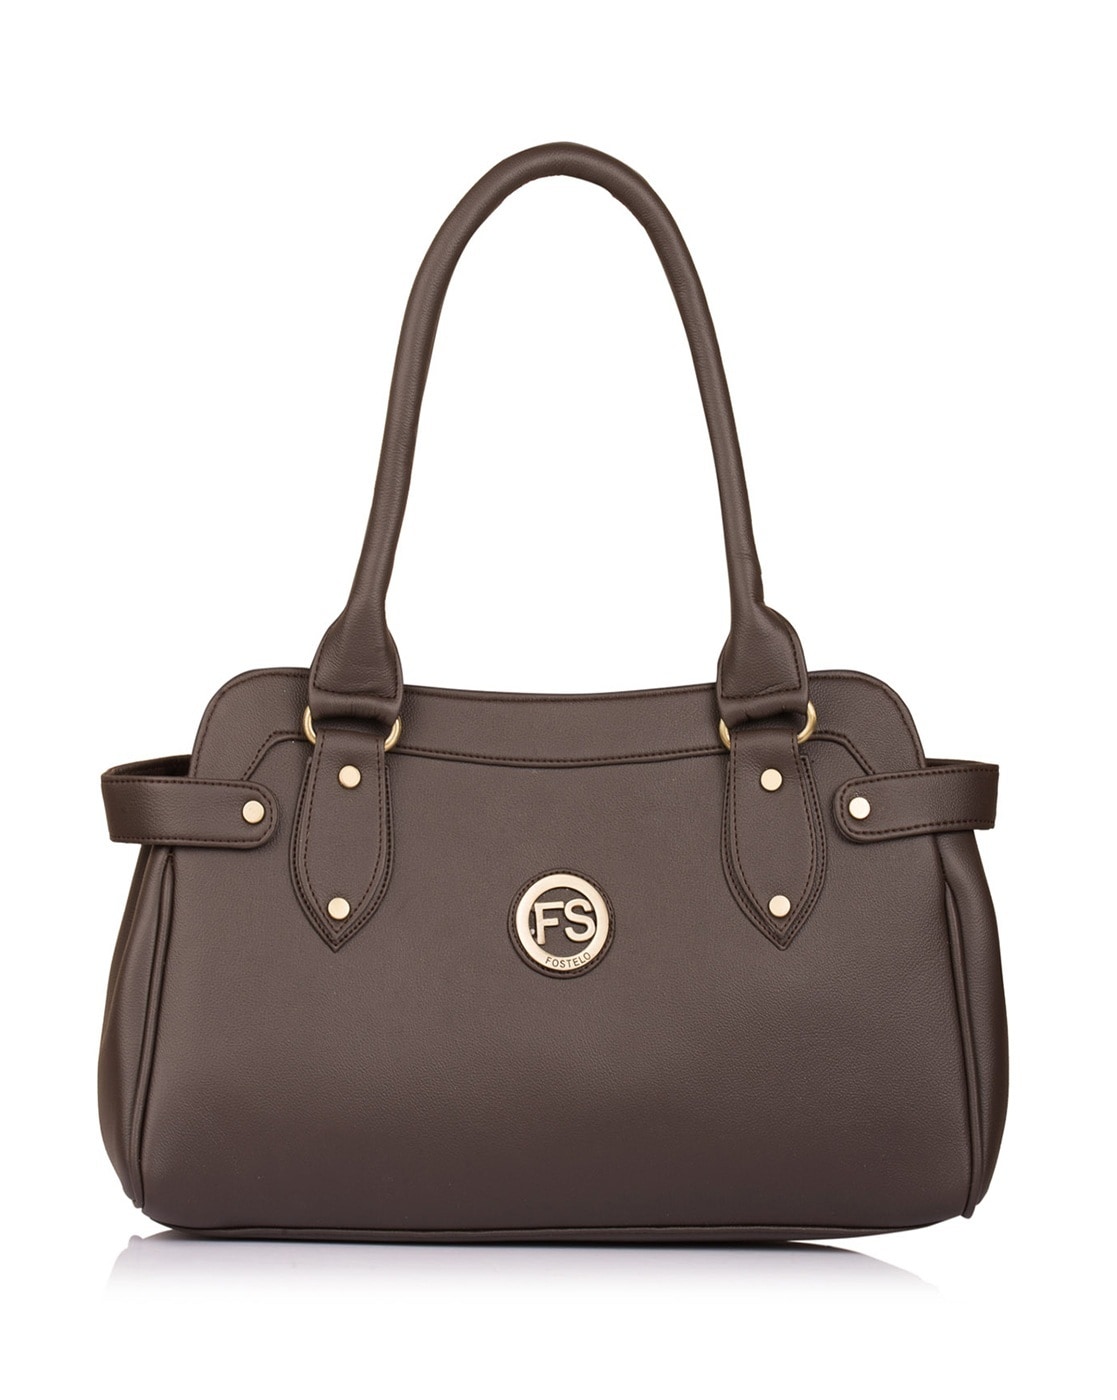 Handbags Online Sale | Buy Girls & Ladies Purse Online - Ilina